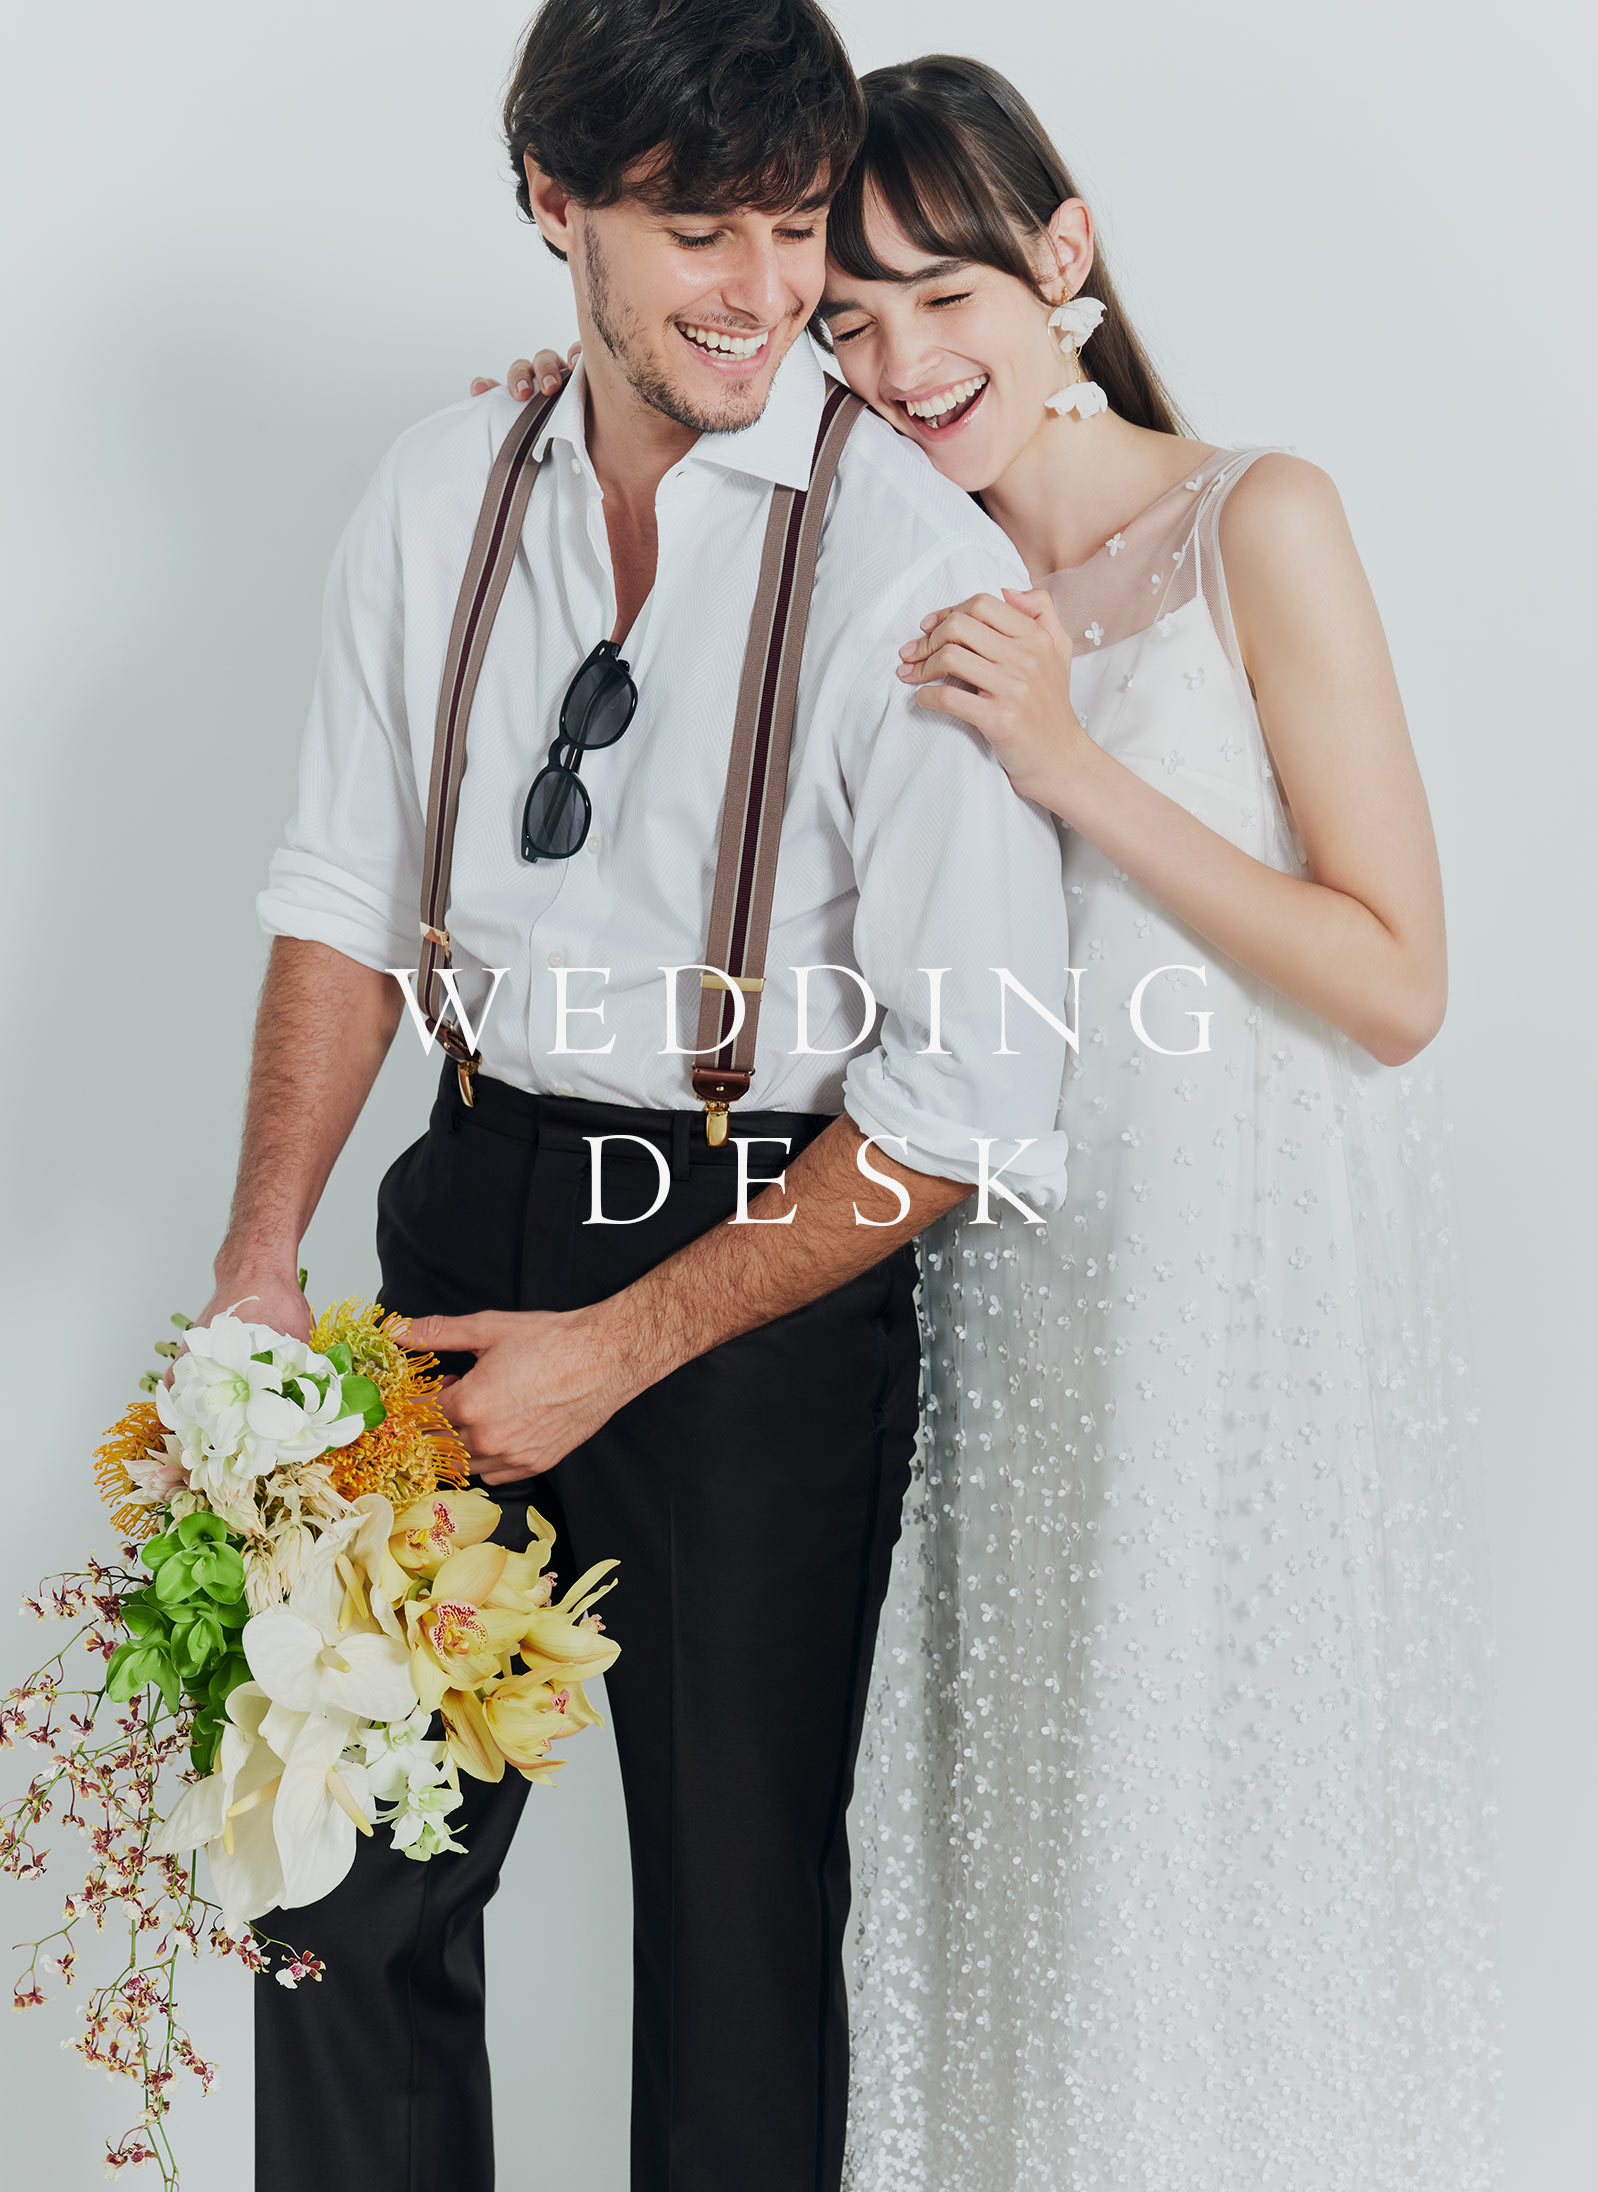 TAKAMI BRIDAL WEDDING DESK スマートフォン用の画像